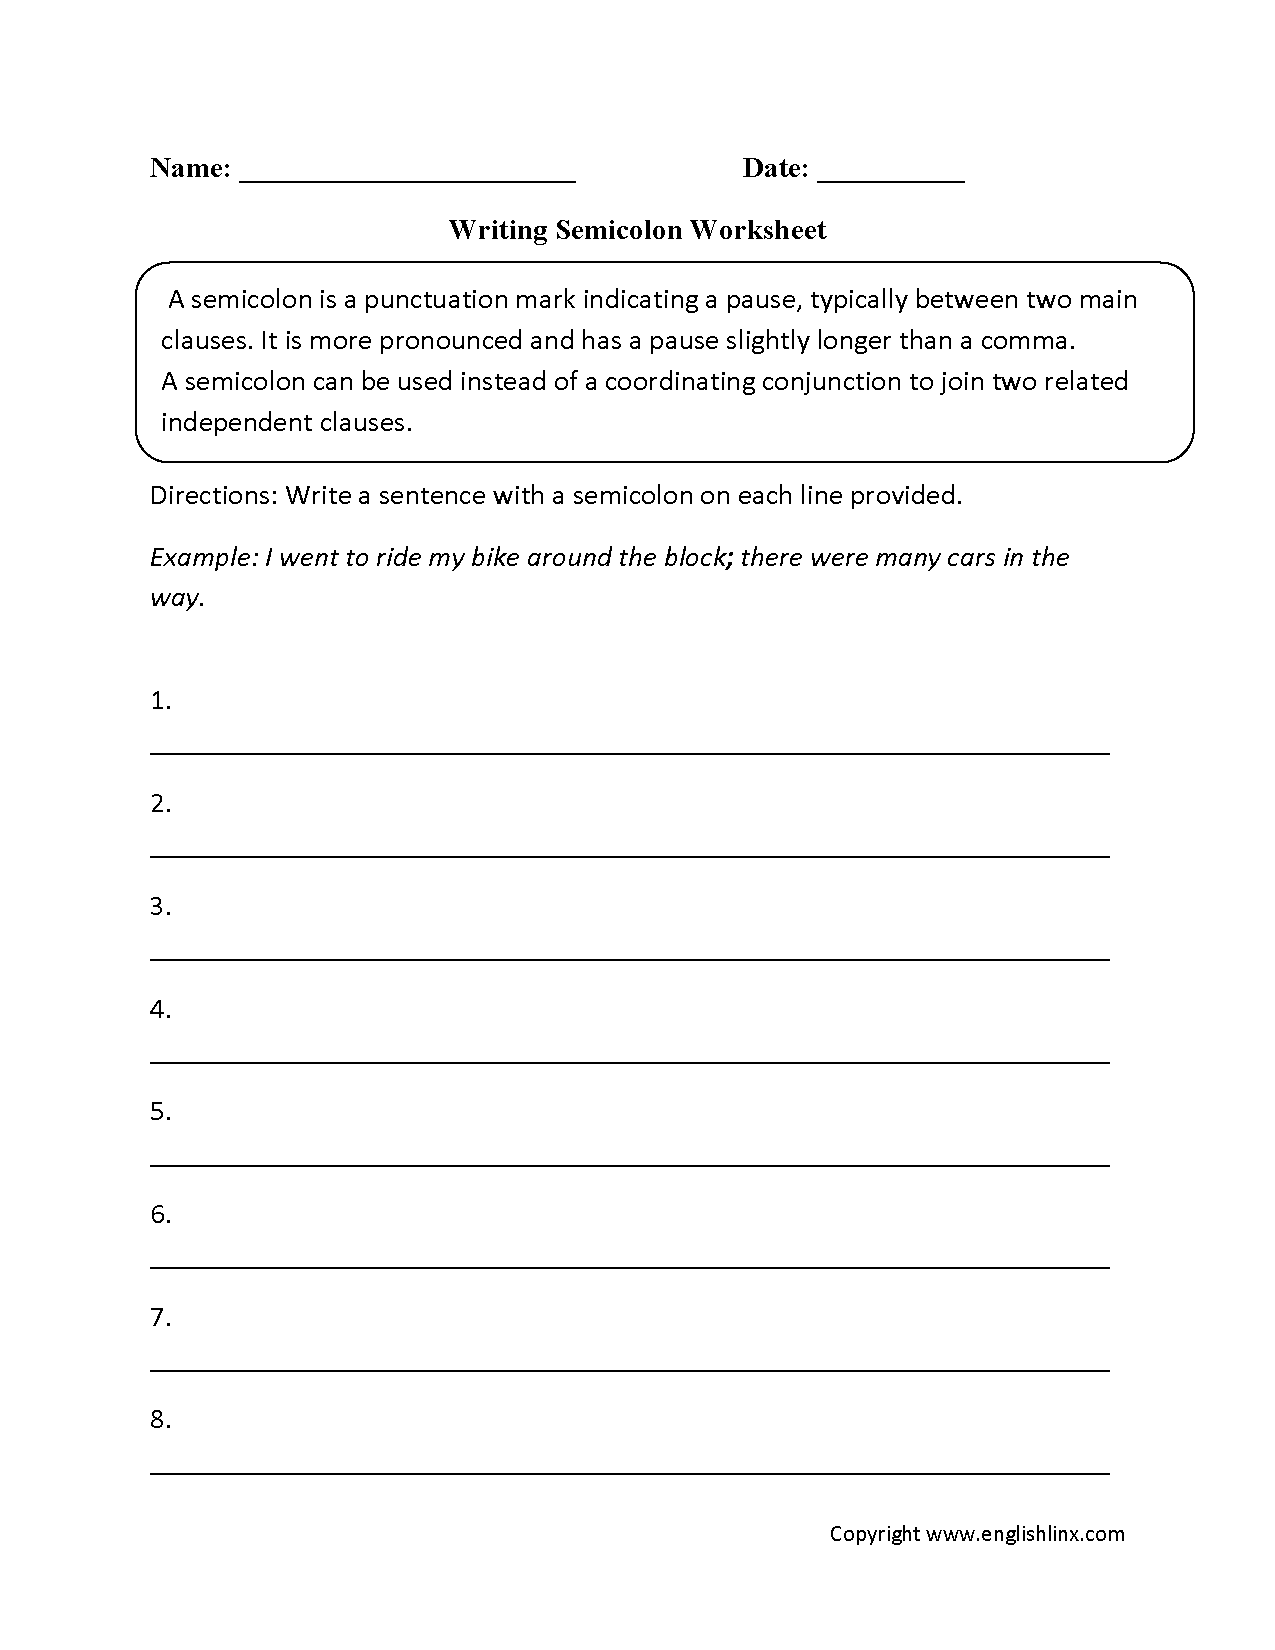 Writing Semicolon Worksheets